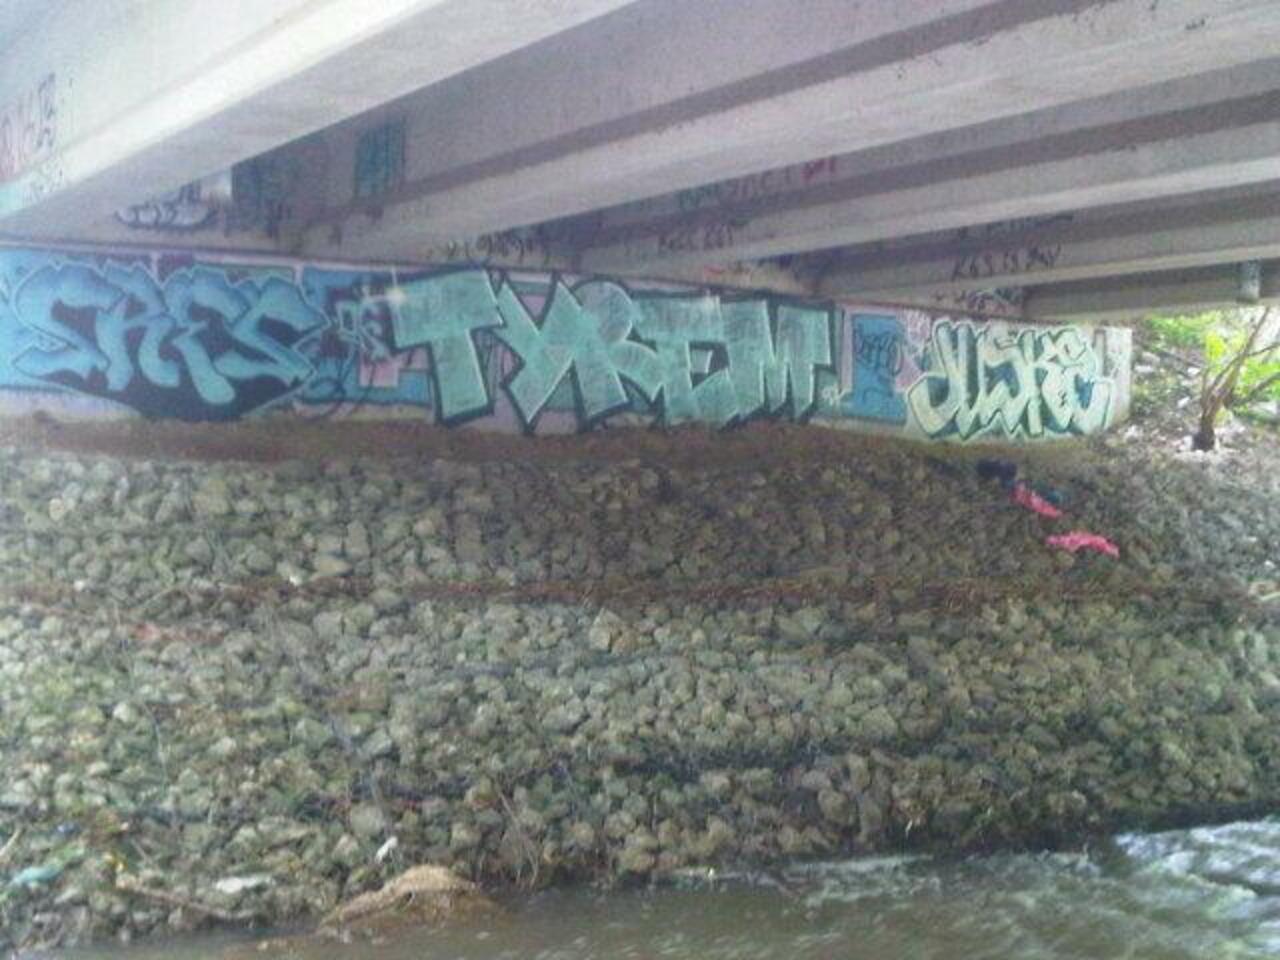 RT @OntarioGraff: Juske, tyrem and sres #graff #graffiti #tunnel #streetart #welovebombing http://t.co/FGypbaD6TZ